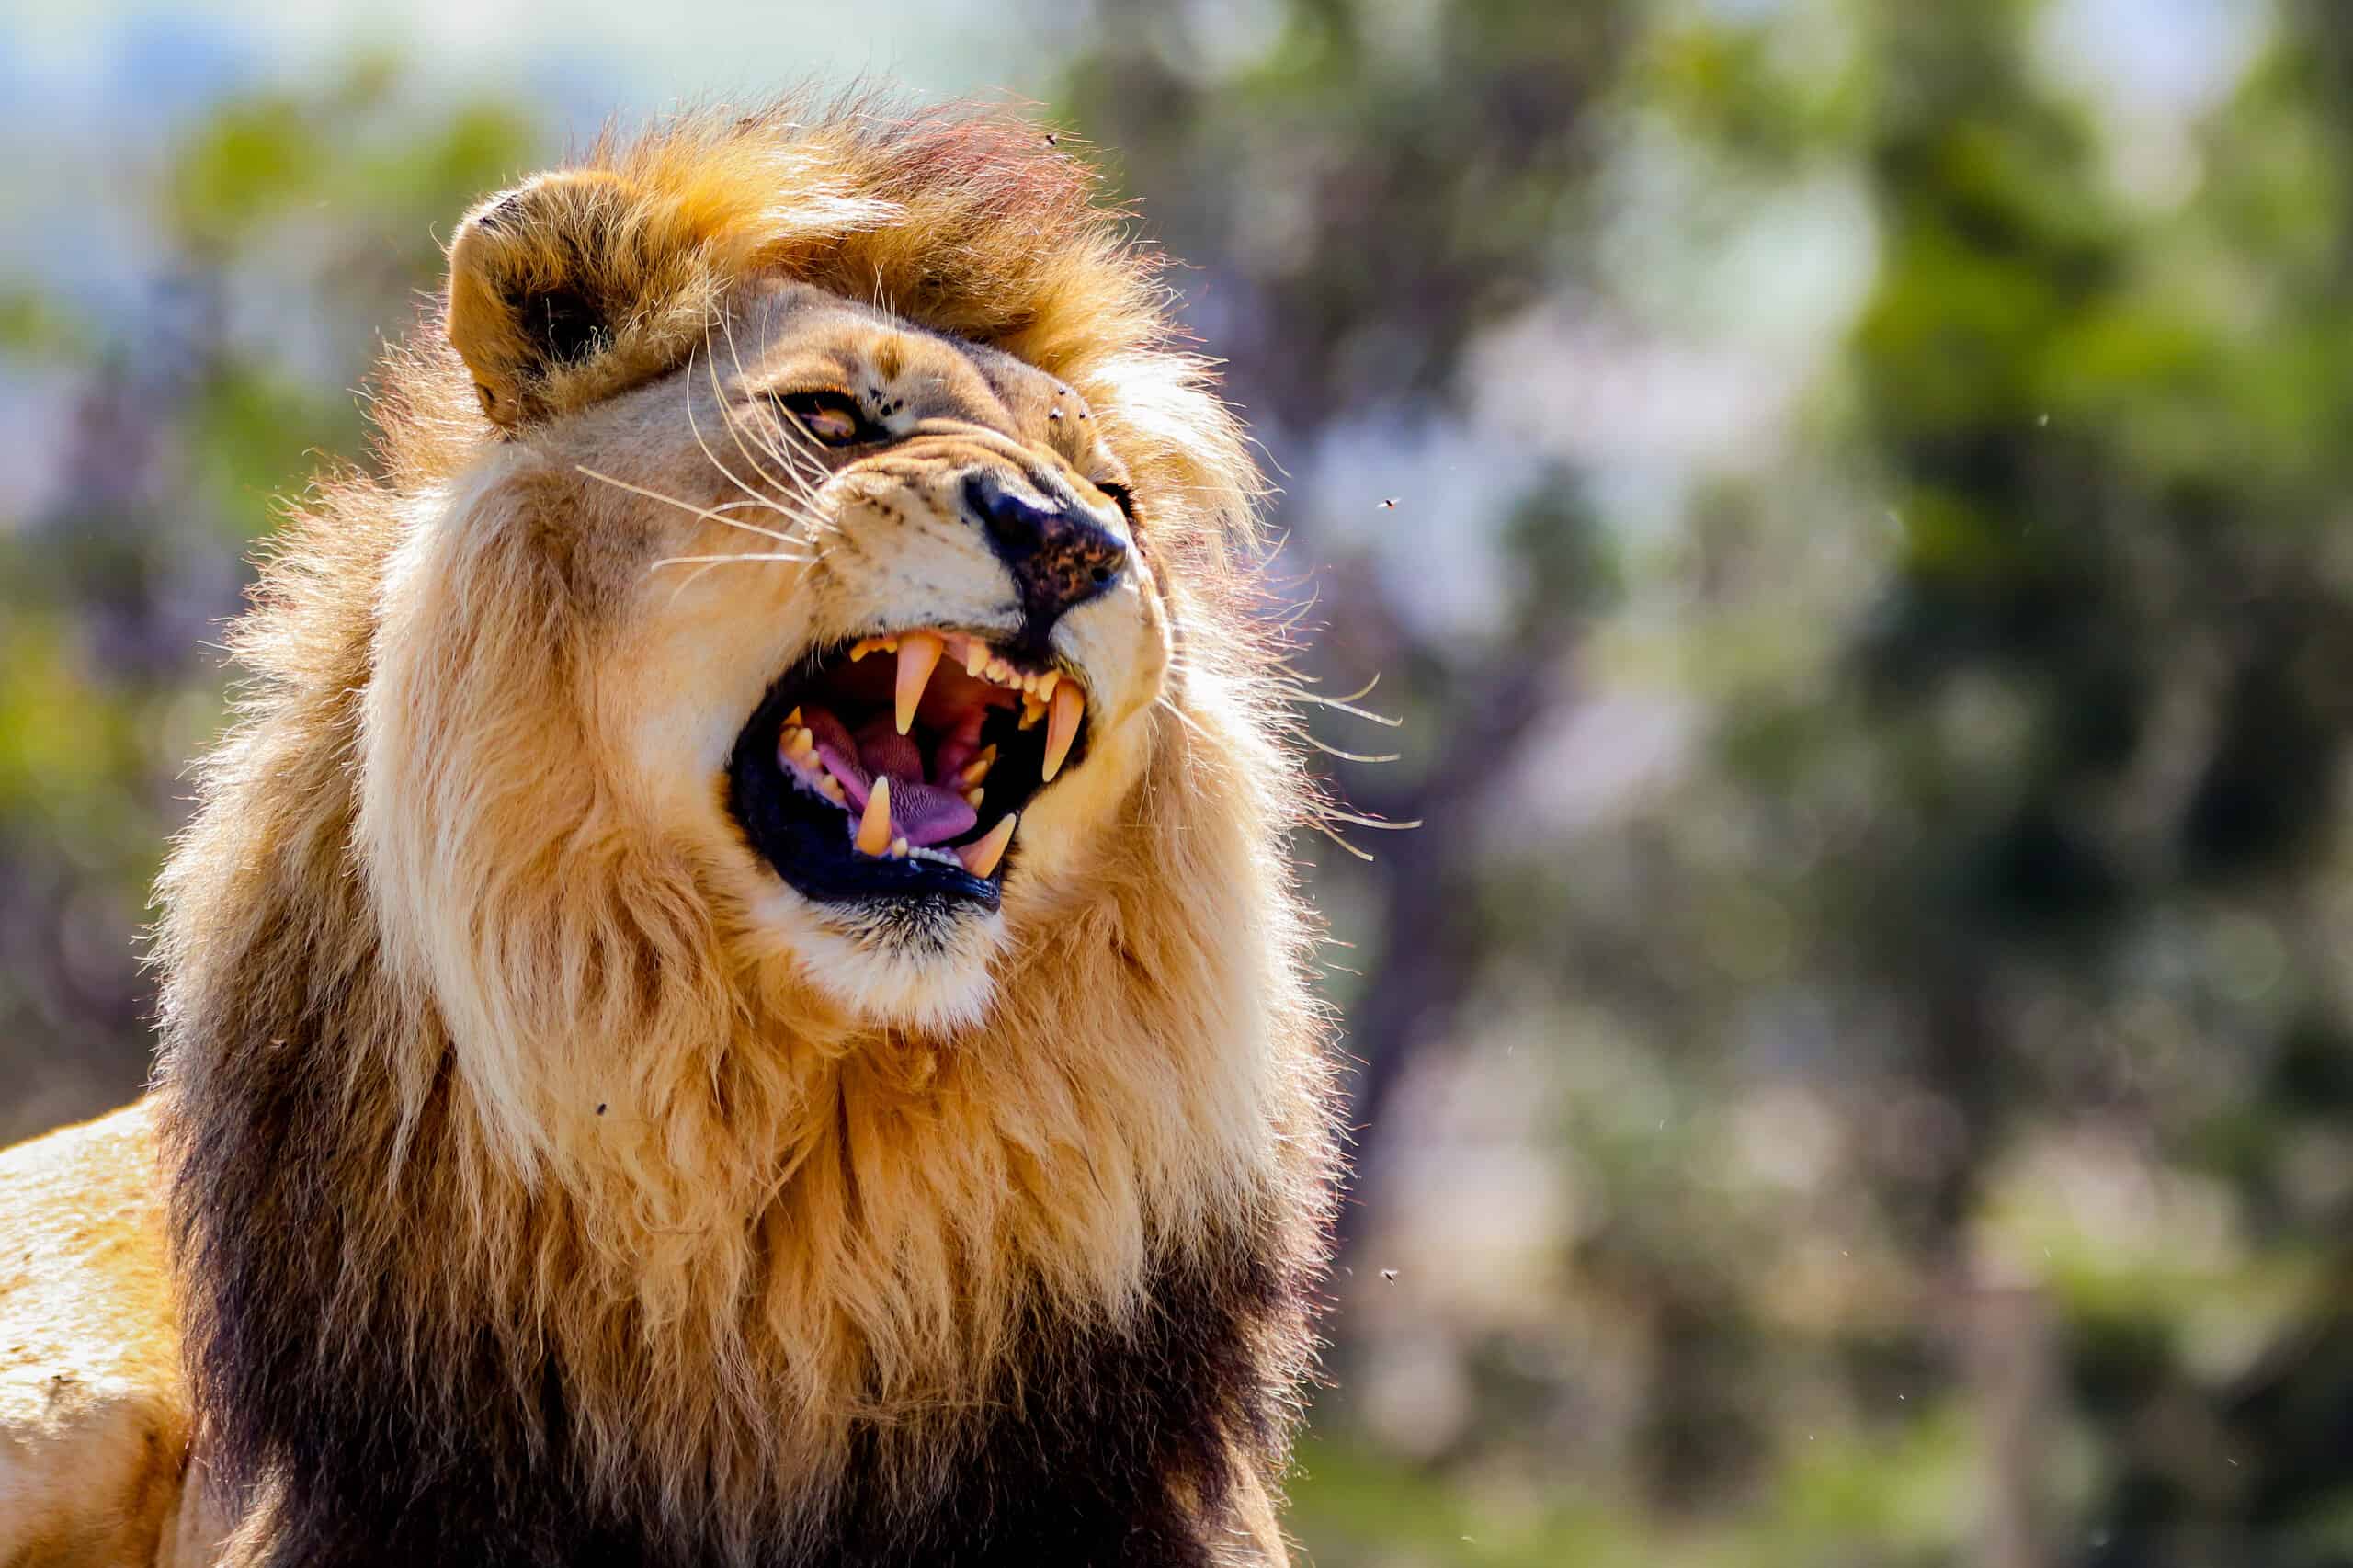 Lion roar sound effect : r/bigcats